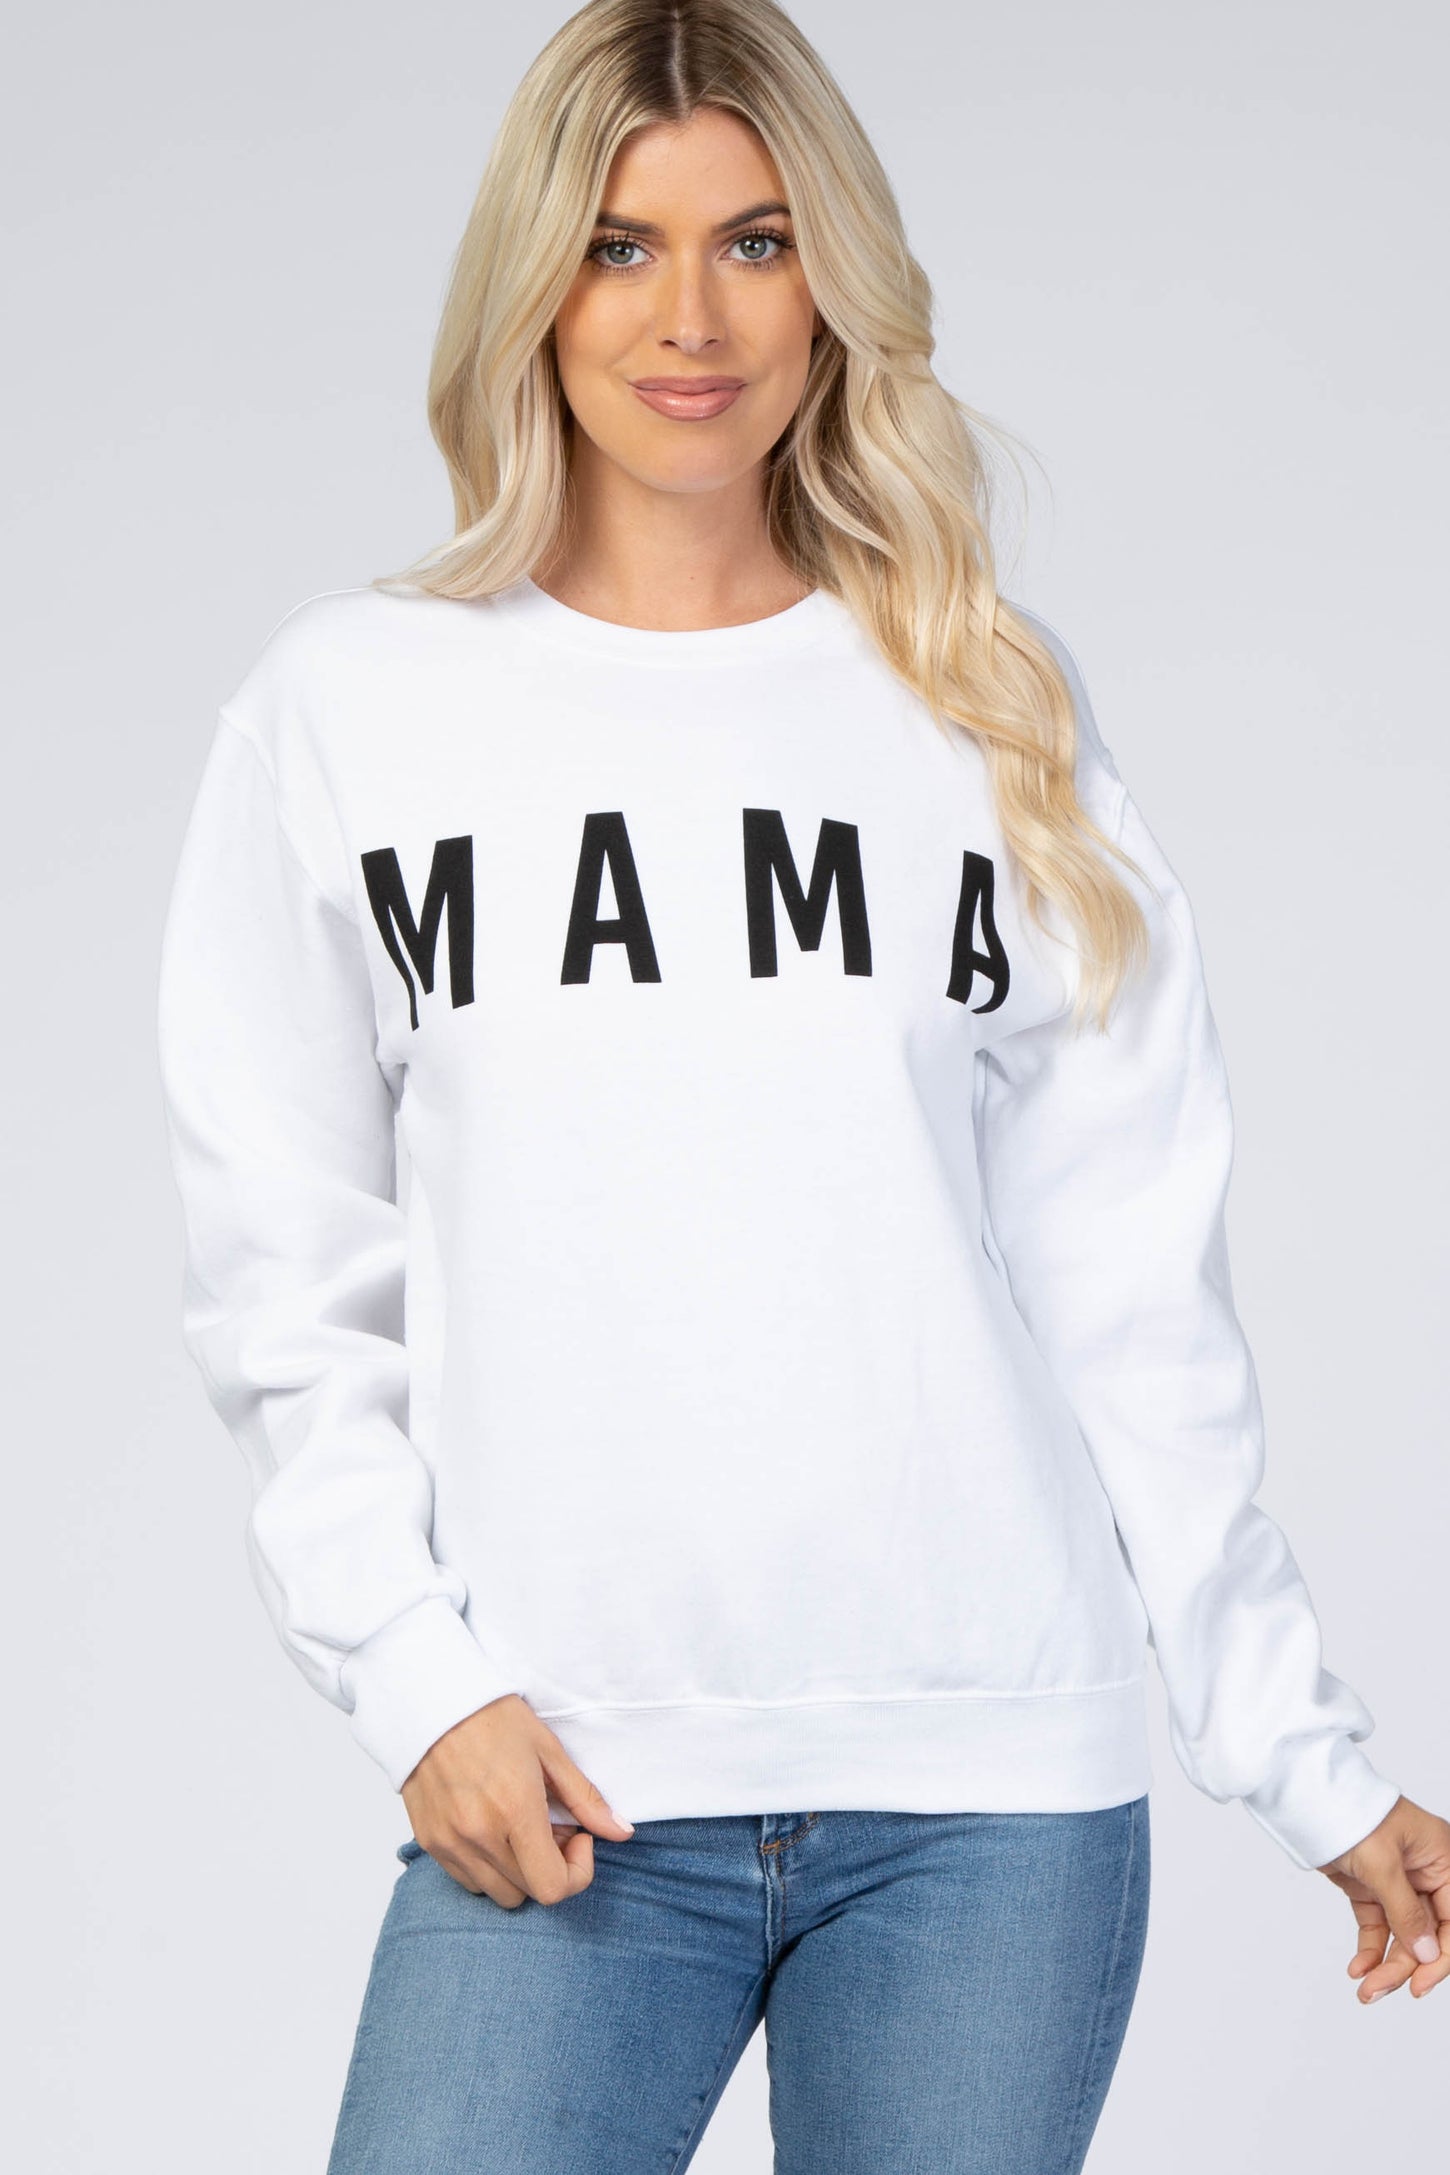 White Screen Print Mama Maternity Pullover Sweatshirt